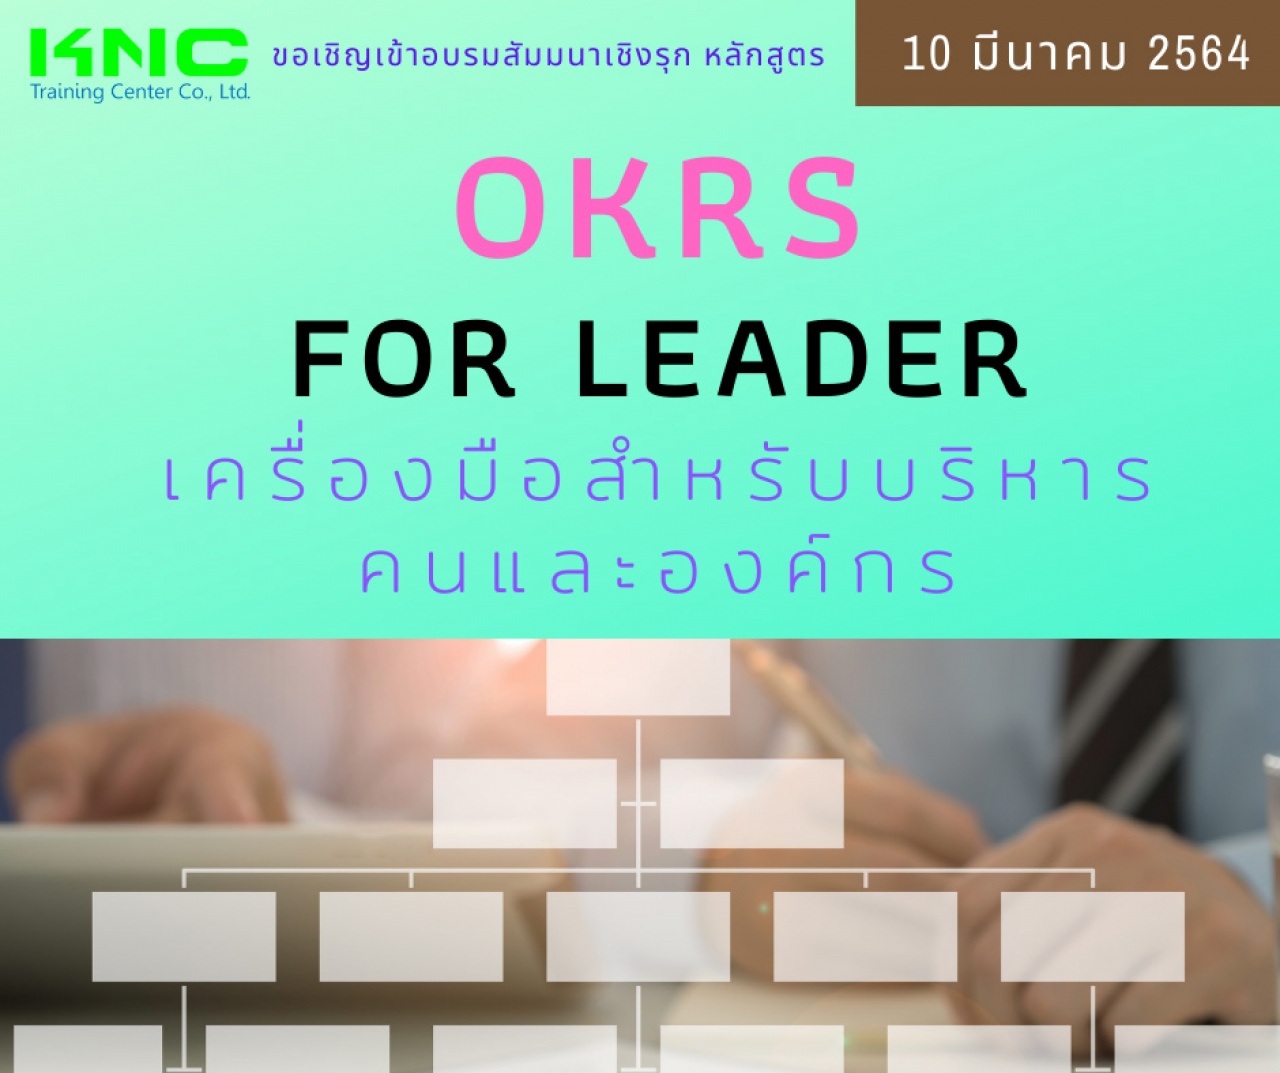 OKRs for Leader เครื่องมือสำหรับบริหารคนและองค์กร